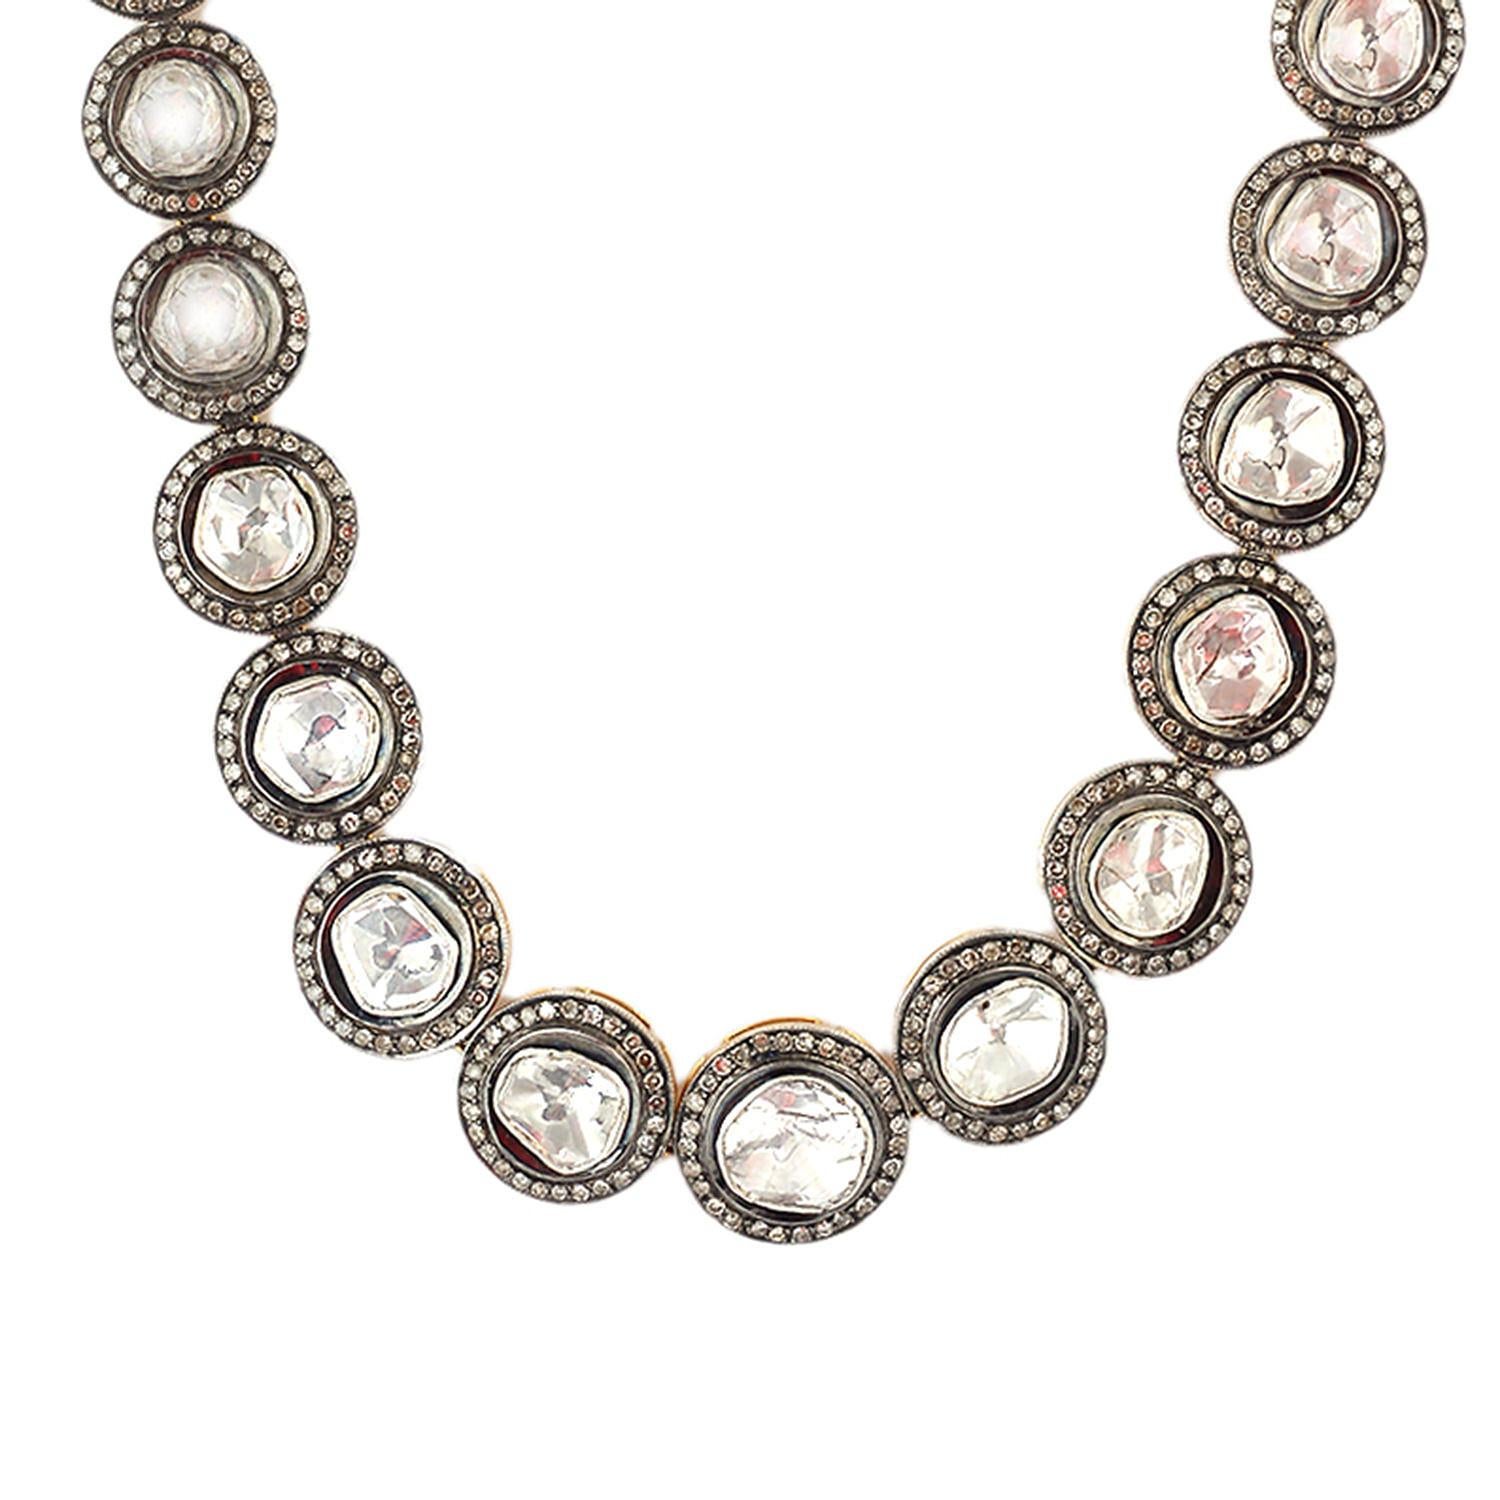 Single line polki diamond necklace with graduating diamond size.

14k:34.77g,
Diamond:22.94ct,
Silver:52.812g,,
Size: 457 MM